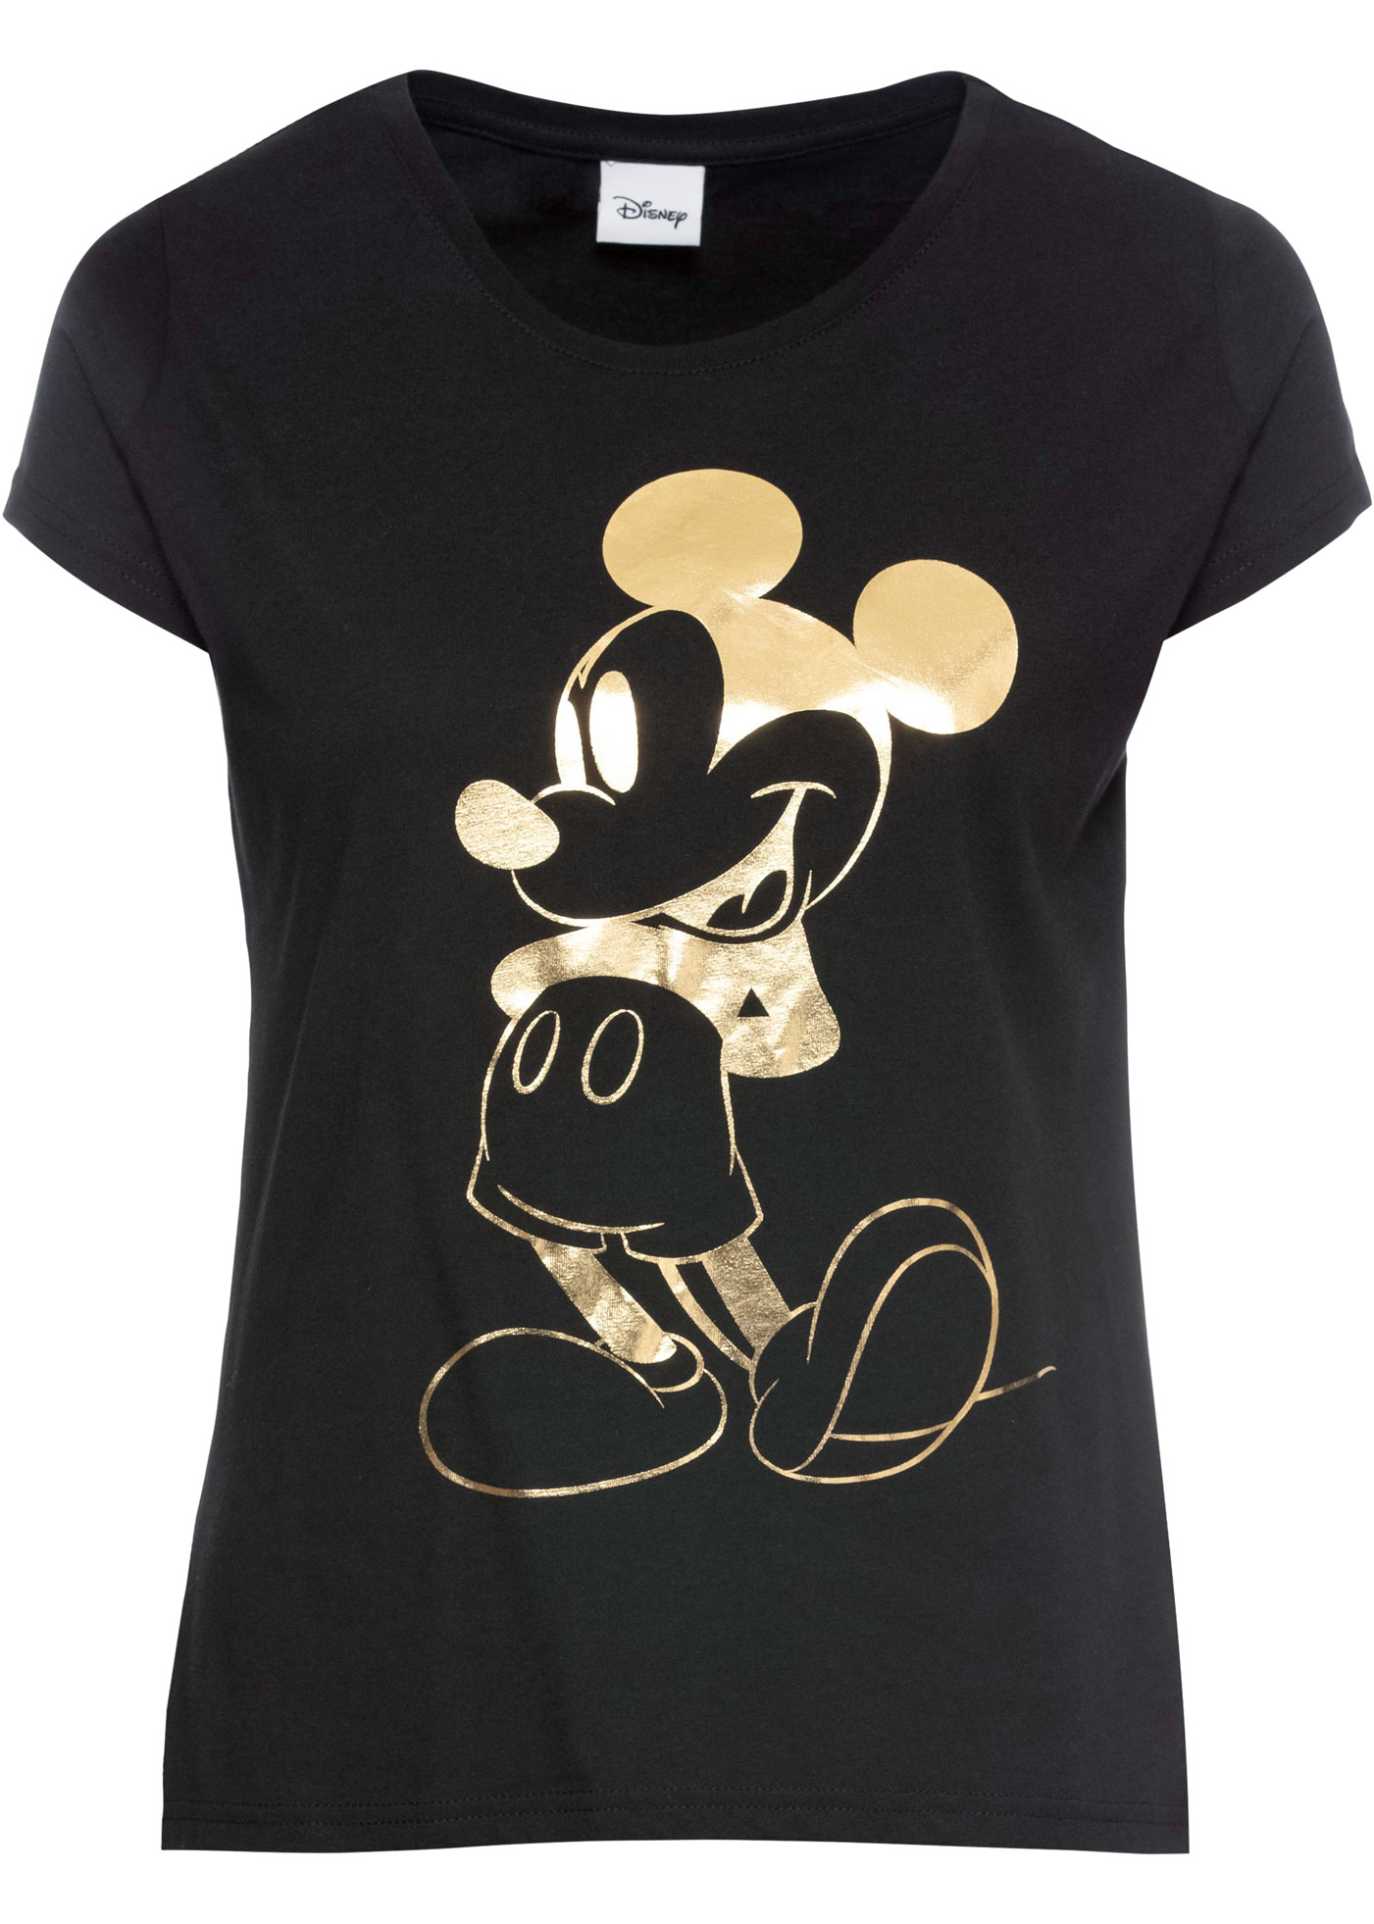 Halb Arm Shirt Italy Fashion Shirt mit  Mickey PrintT-Shirt in vielen Farben